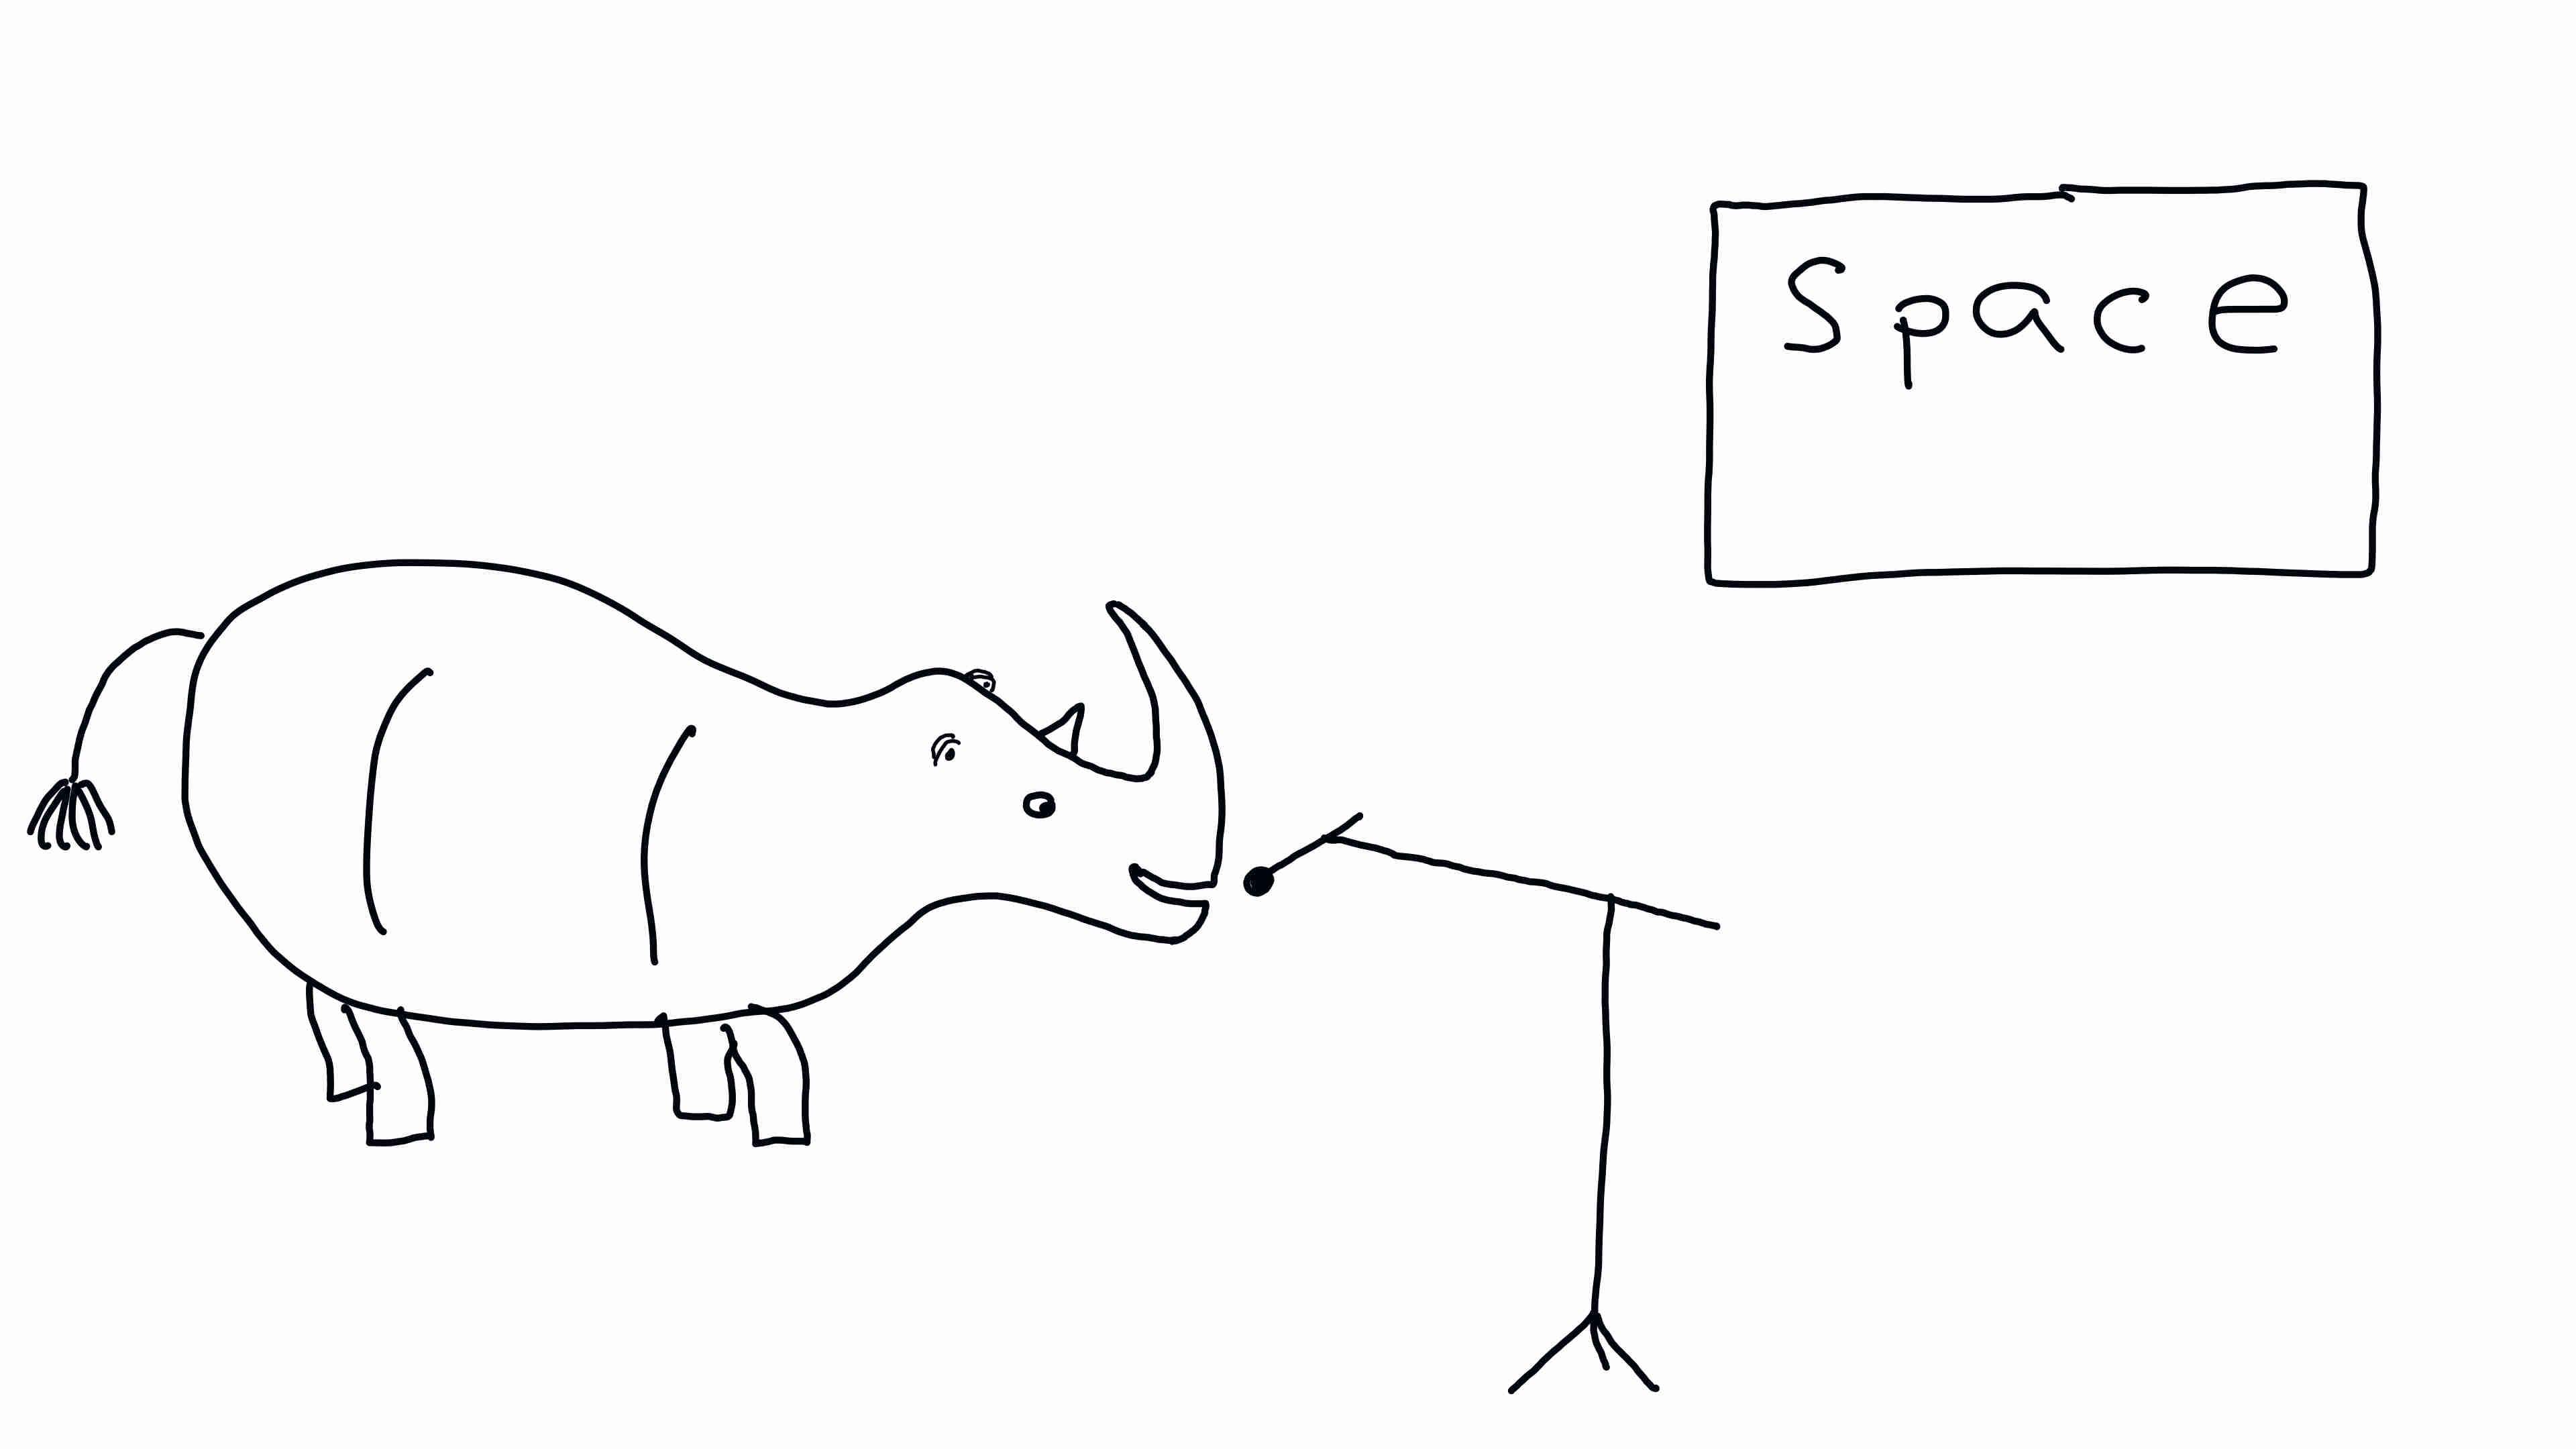 Rhino makes space presentation